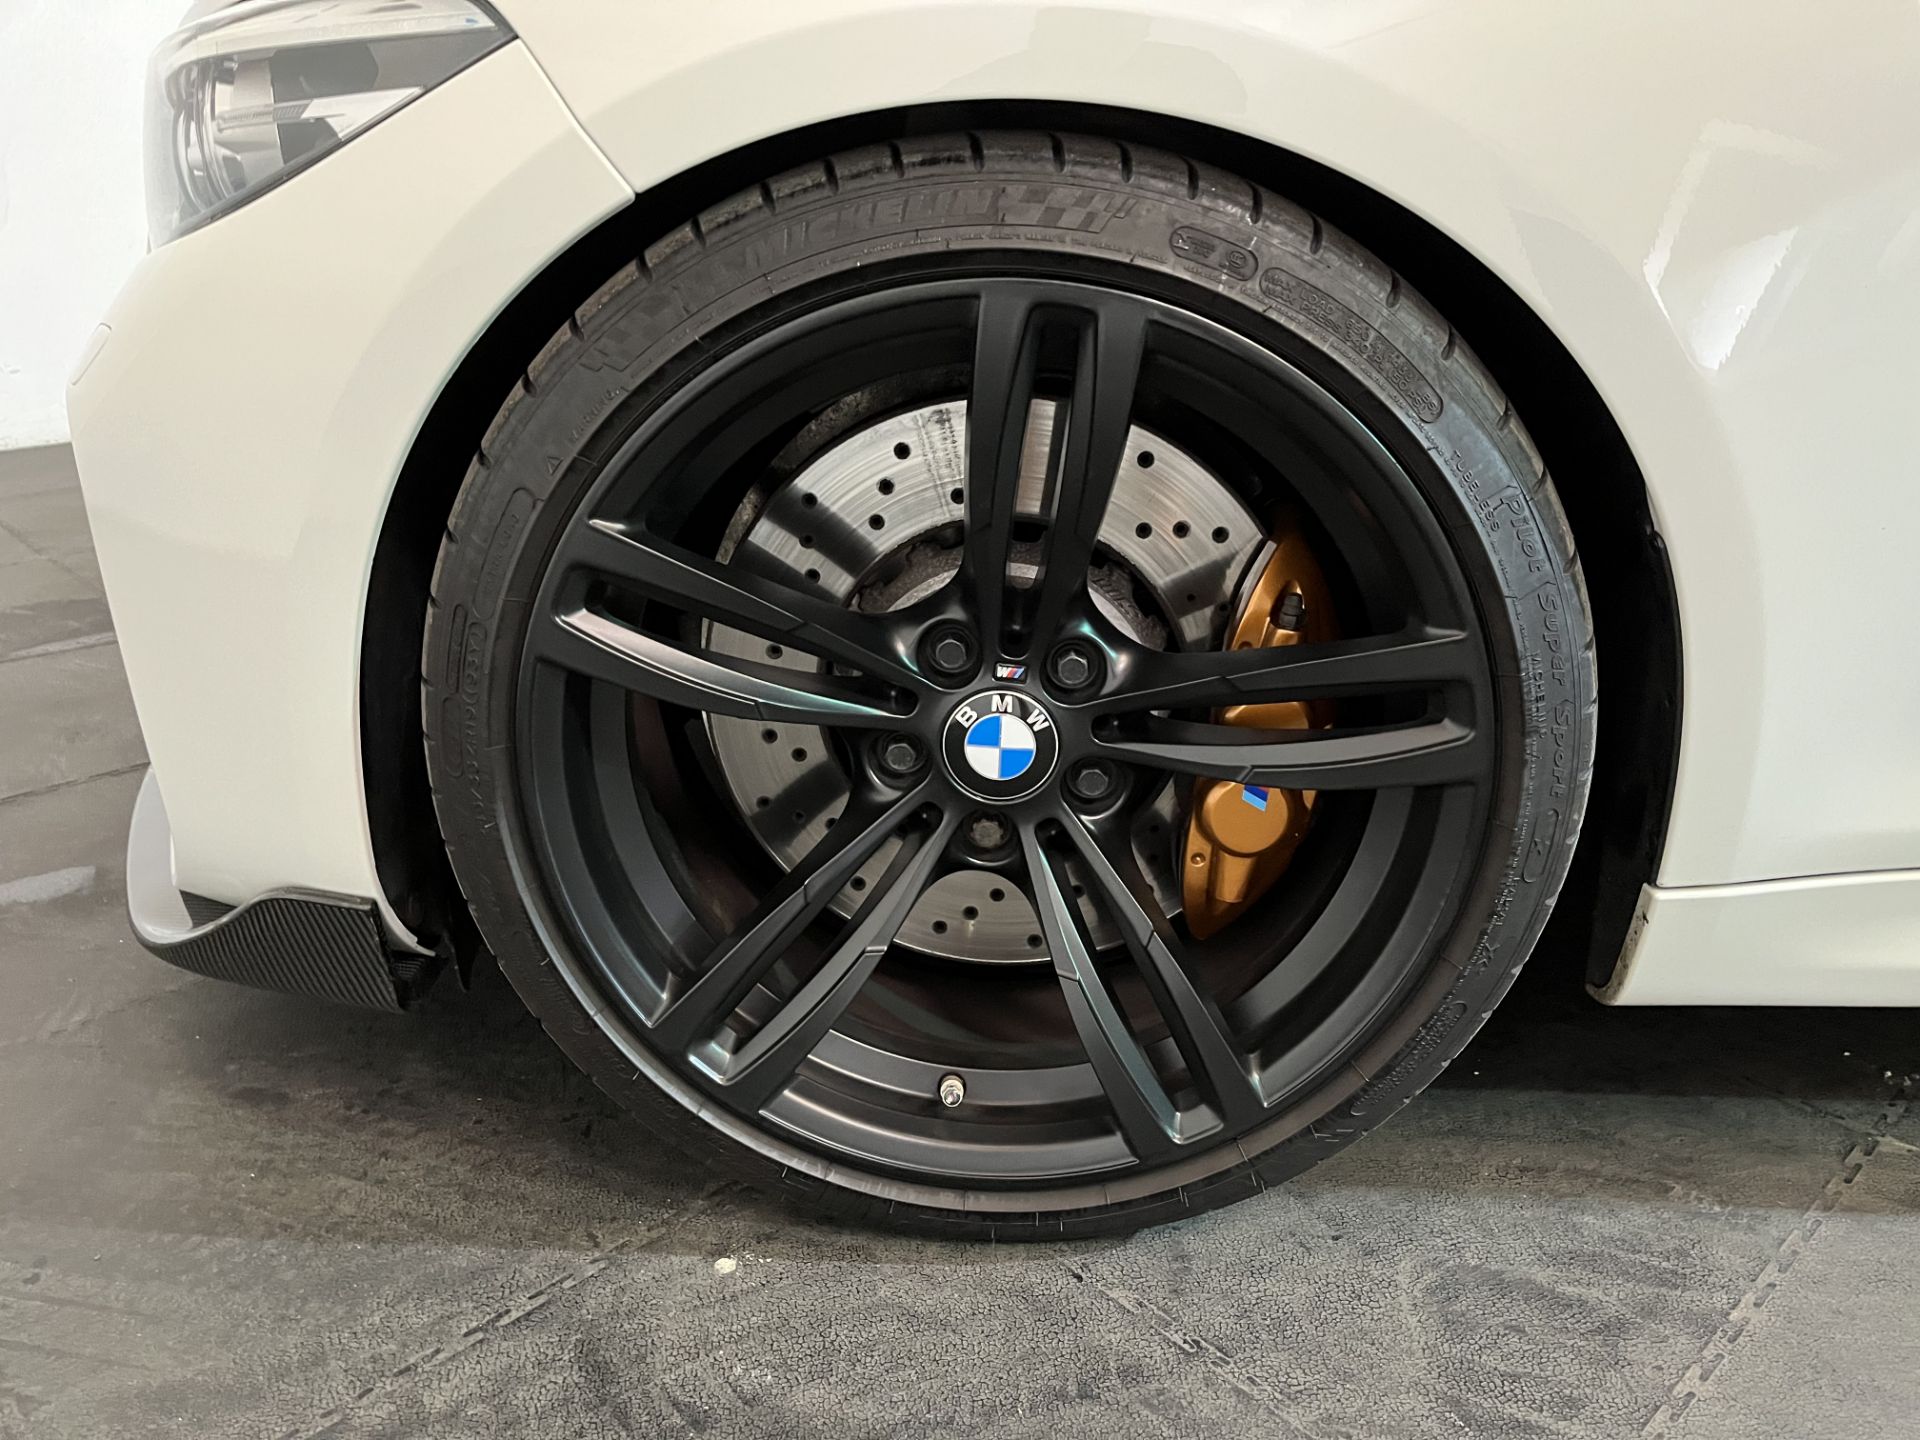 2017 BMW M2 Auto - 2979cc - Image 17 of 18